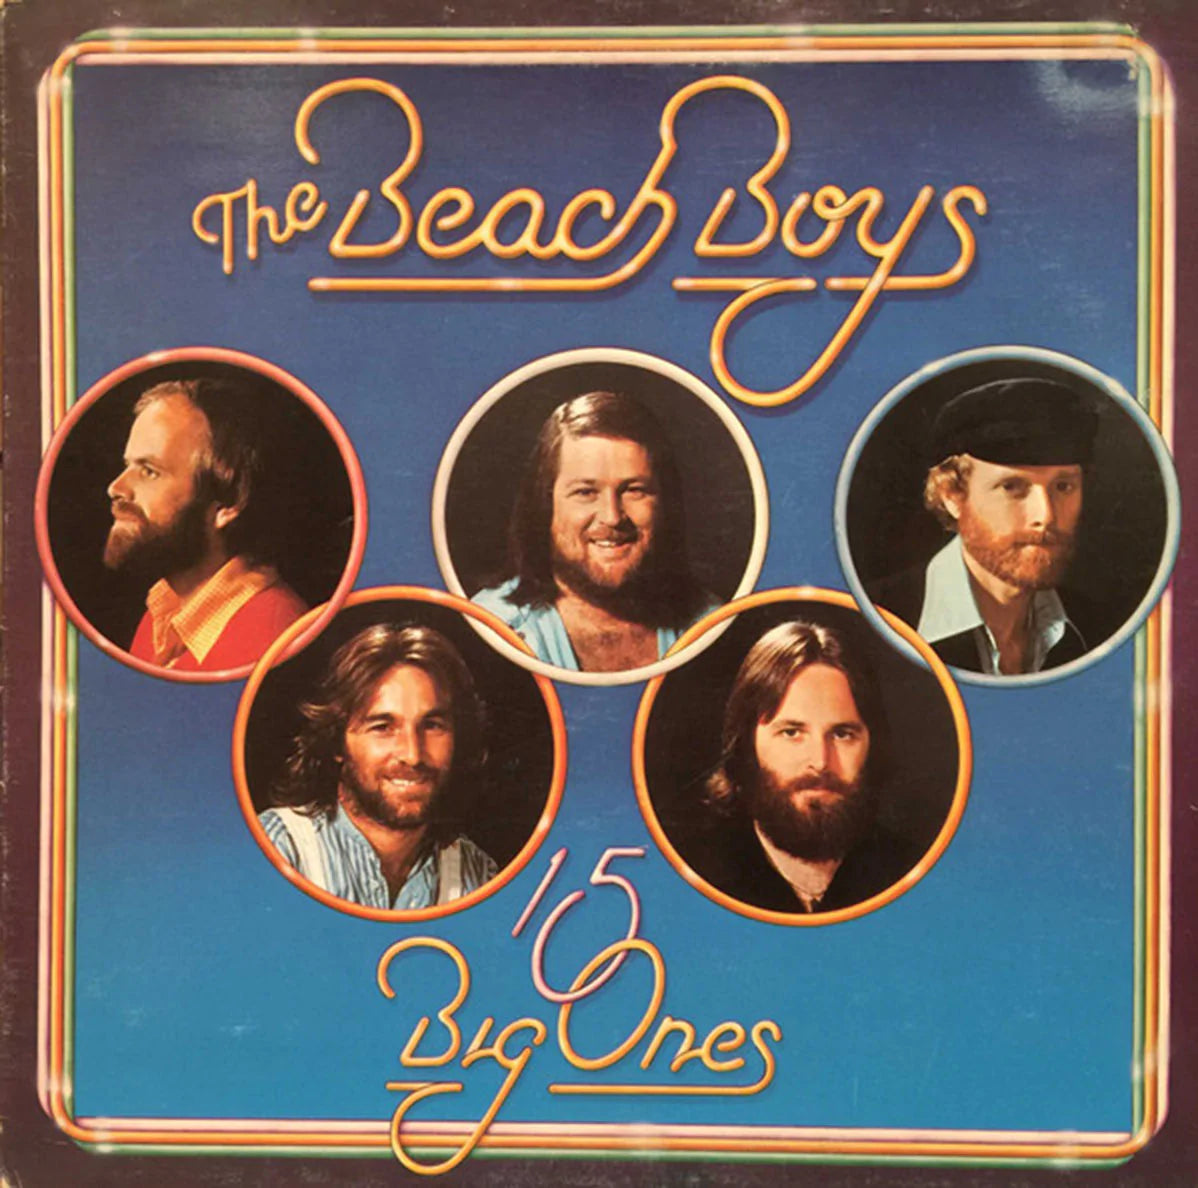 The Beach Boys – 15 Big Ones - 1976